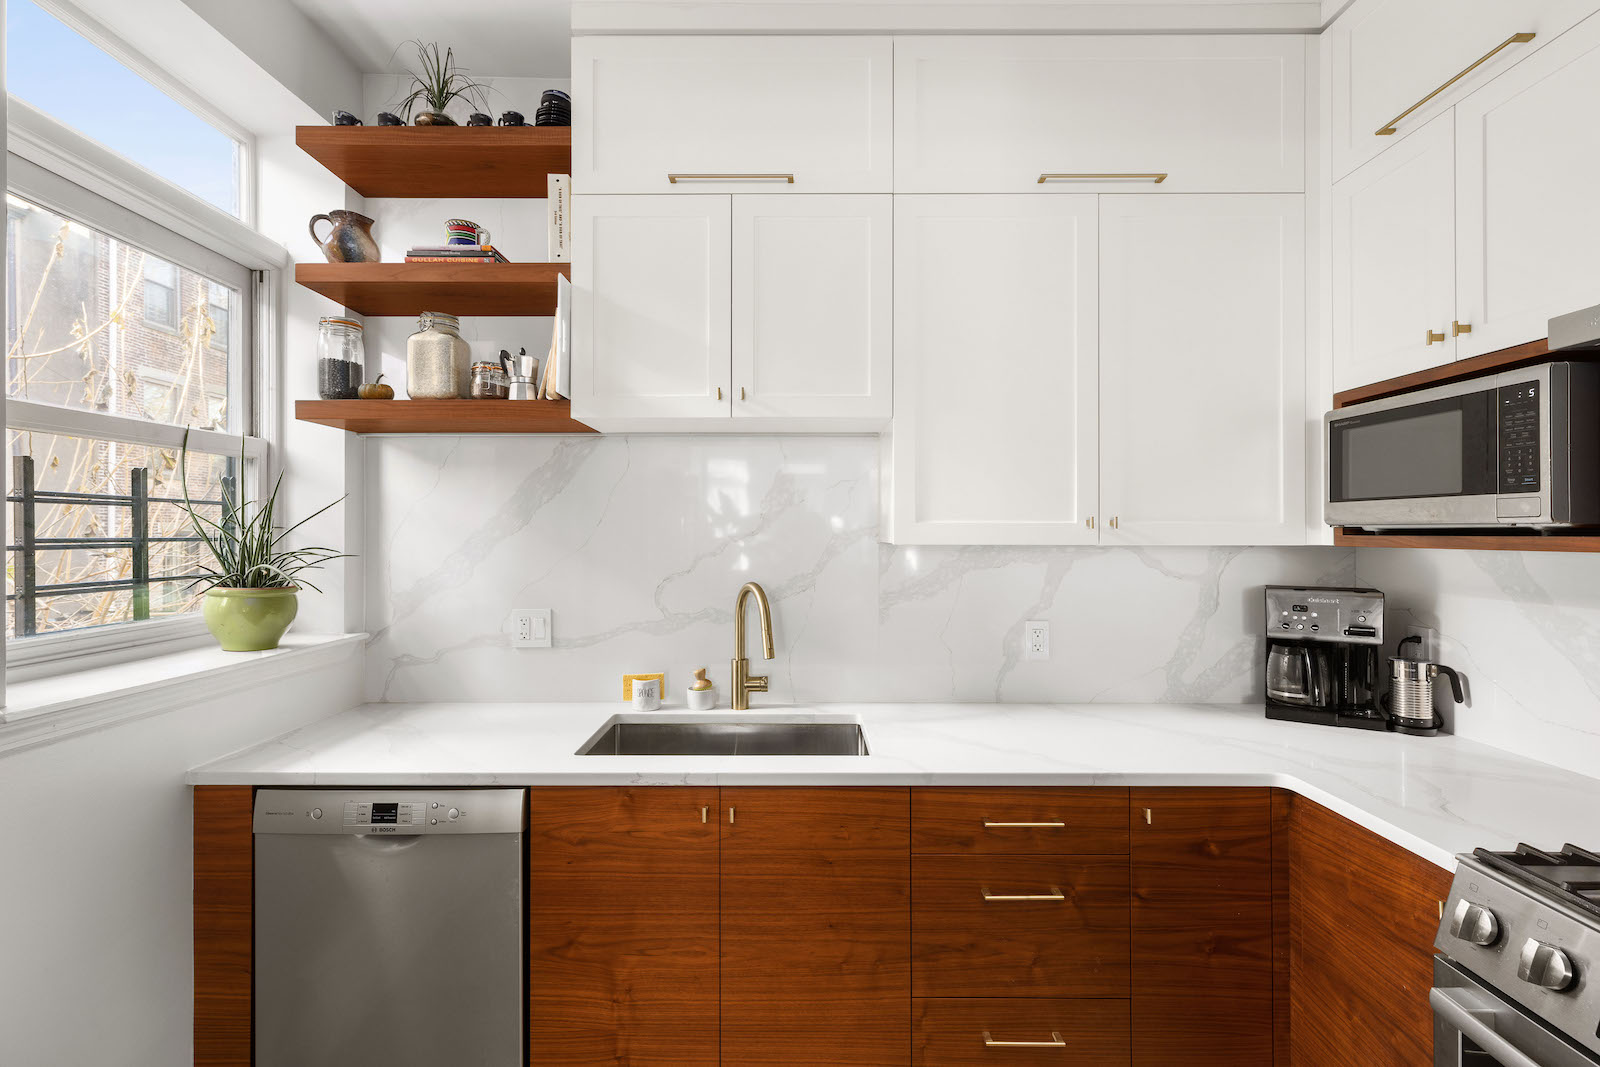 brooklyn kitchen with walnut and white cabinets and quartz backsplash bedford-stuyvesant